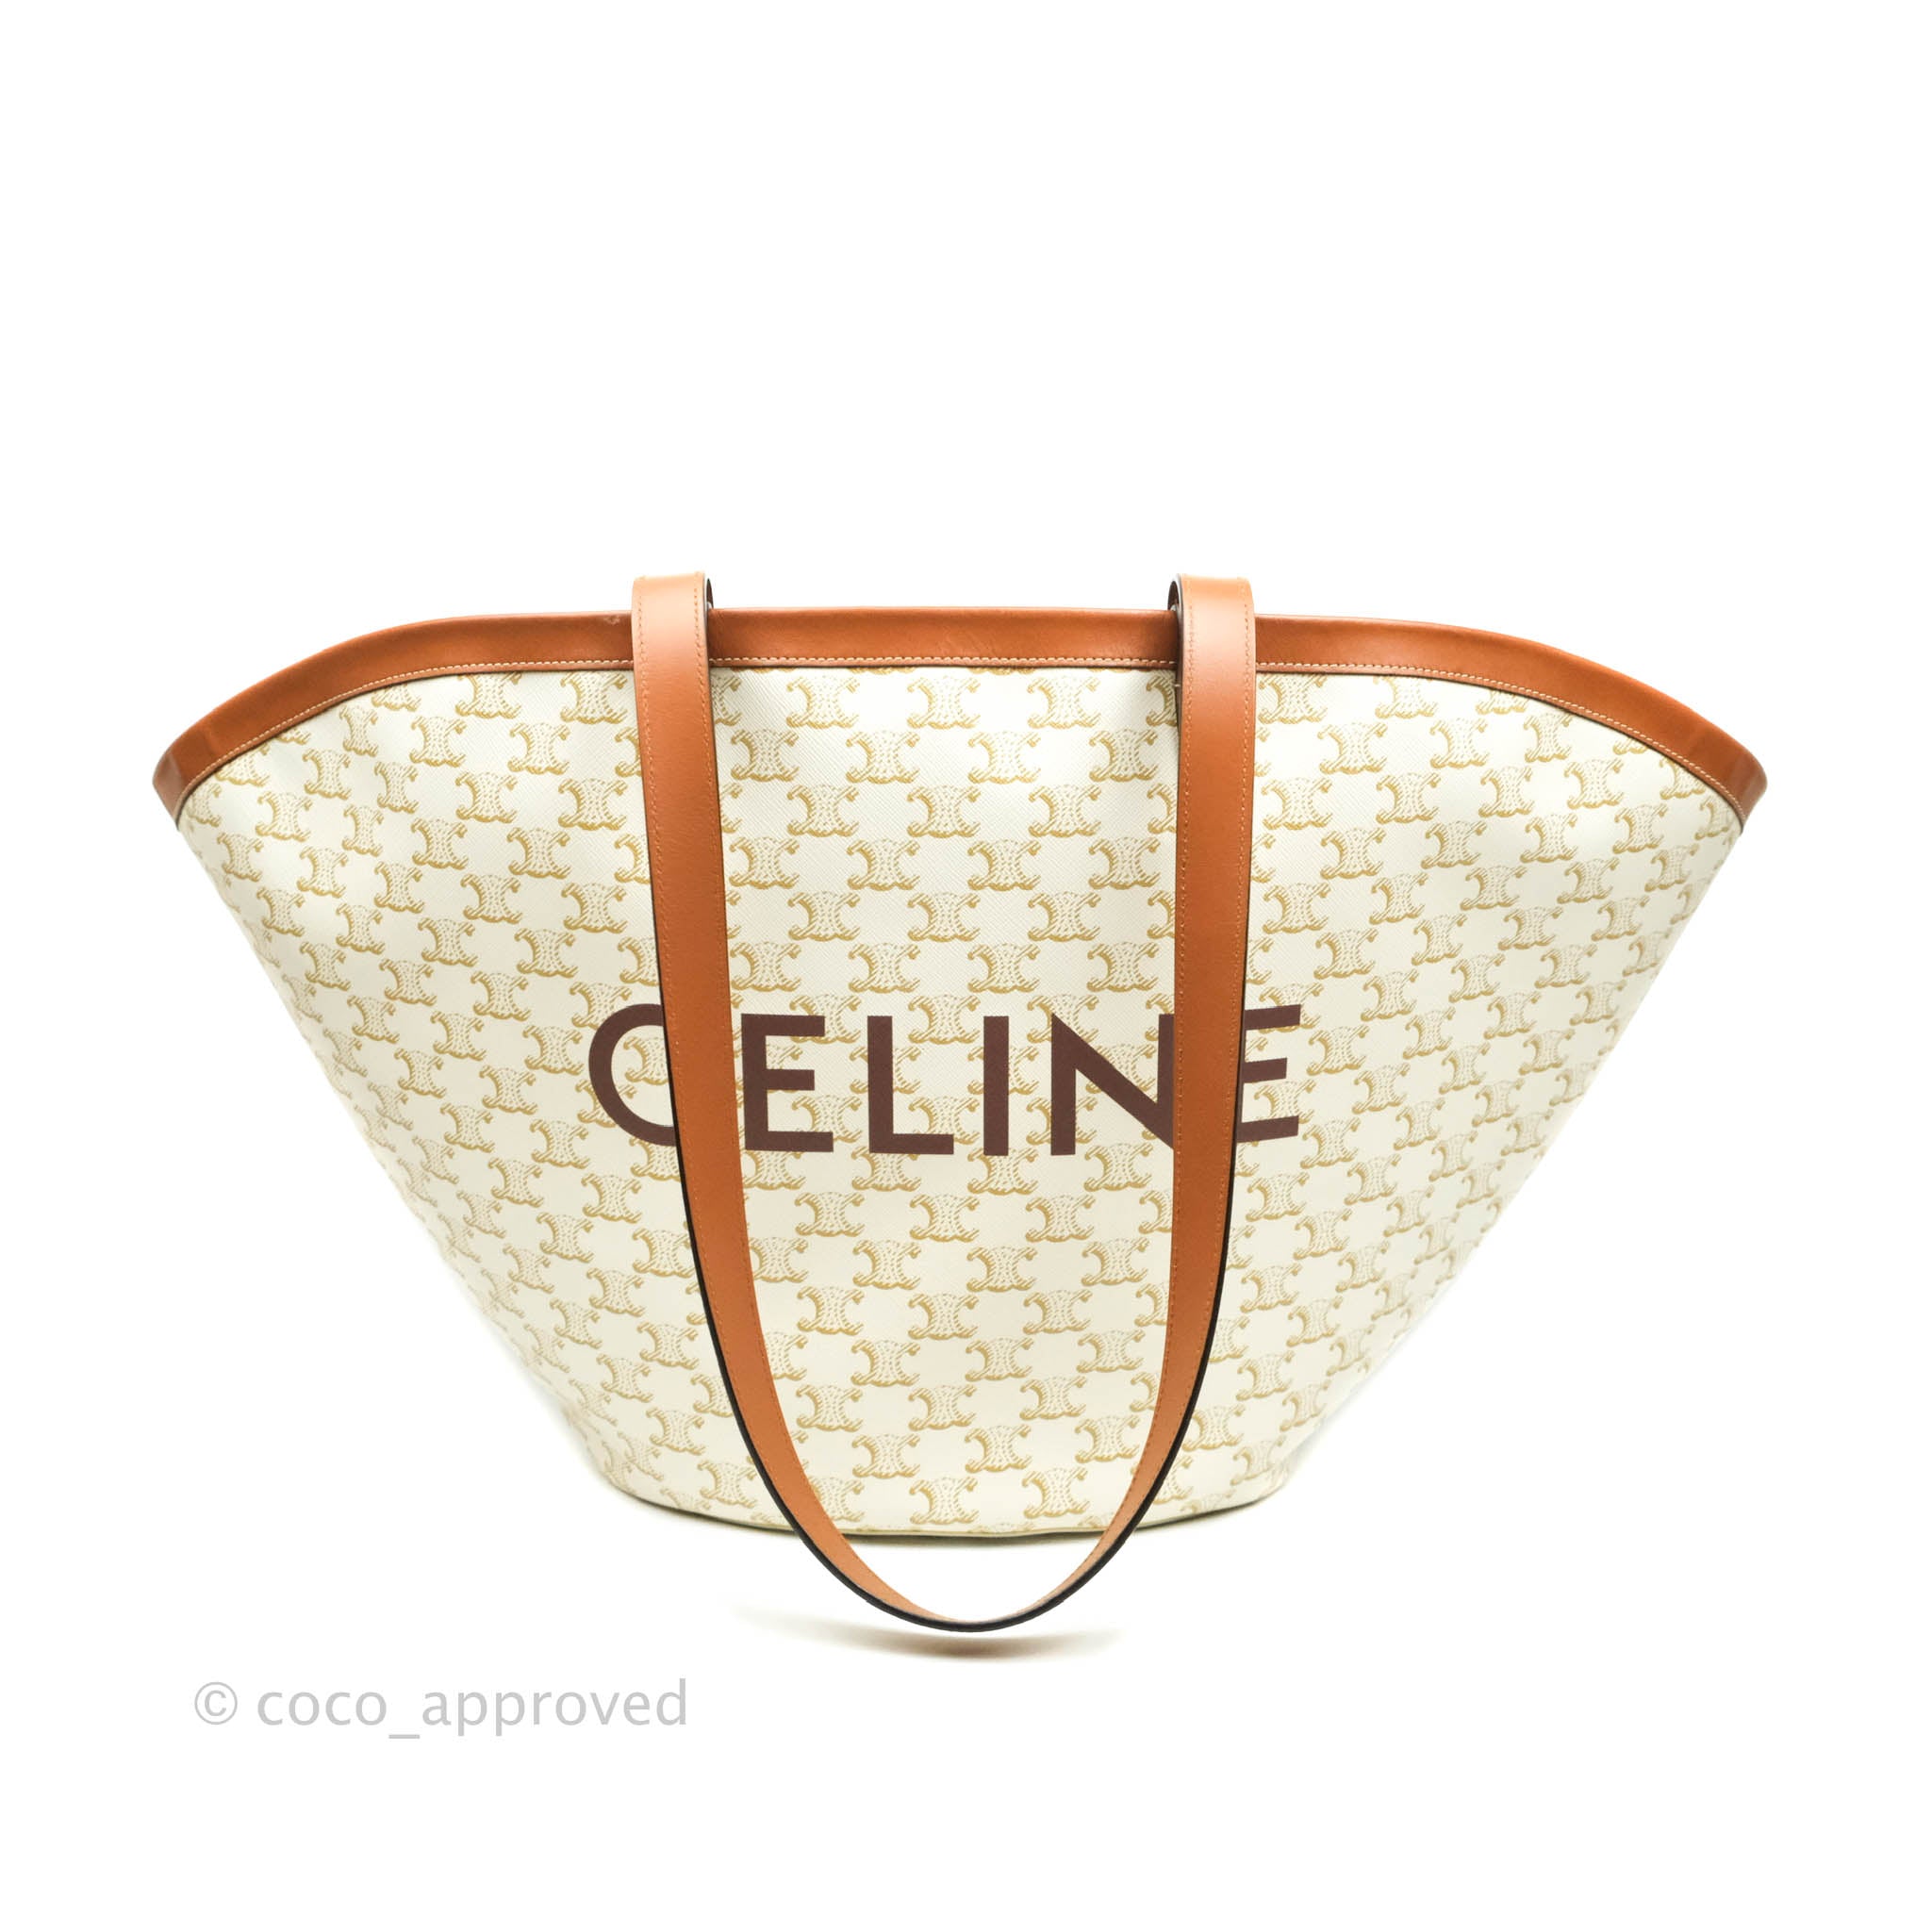 Celine Celine Canvas Handbag